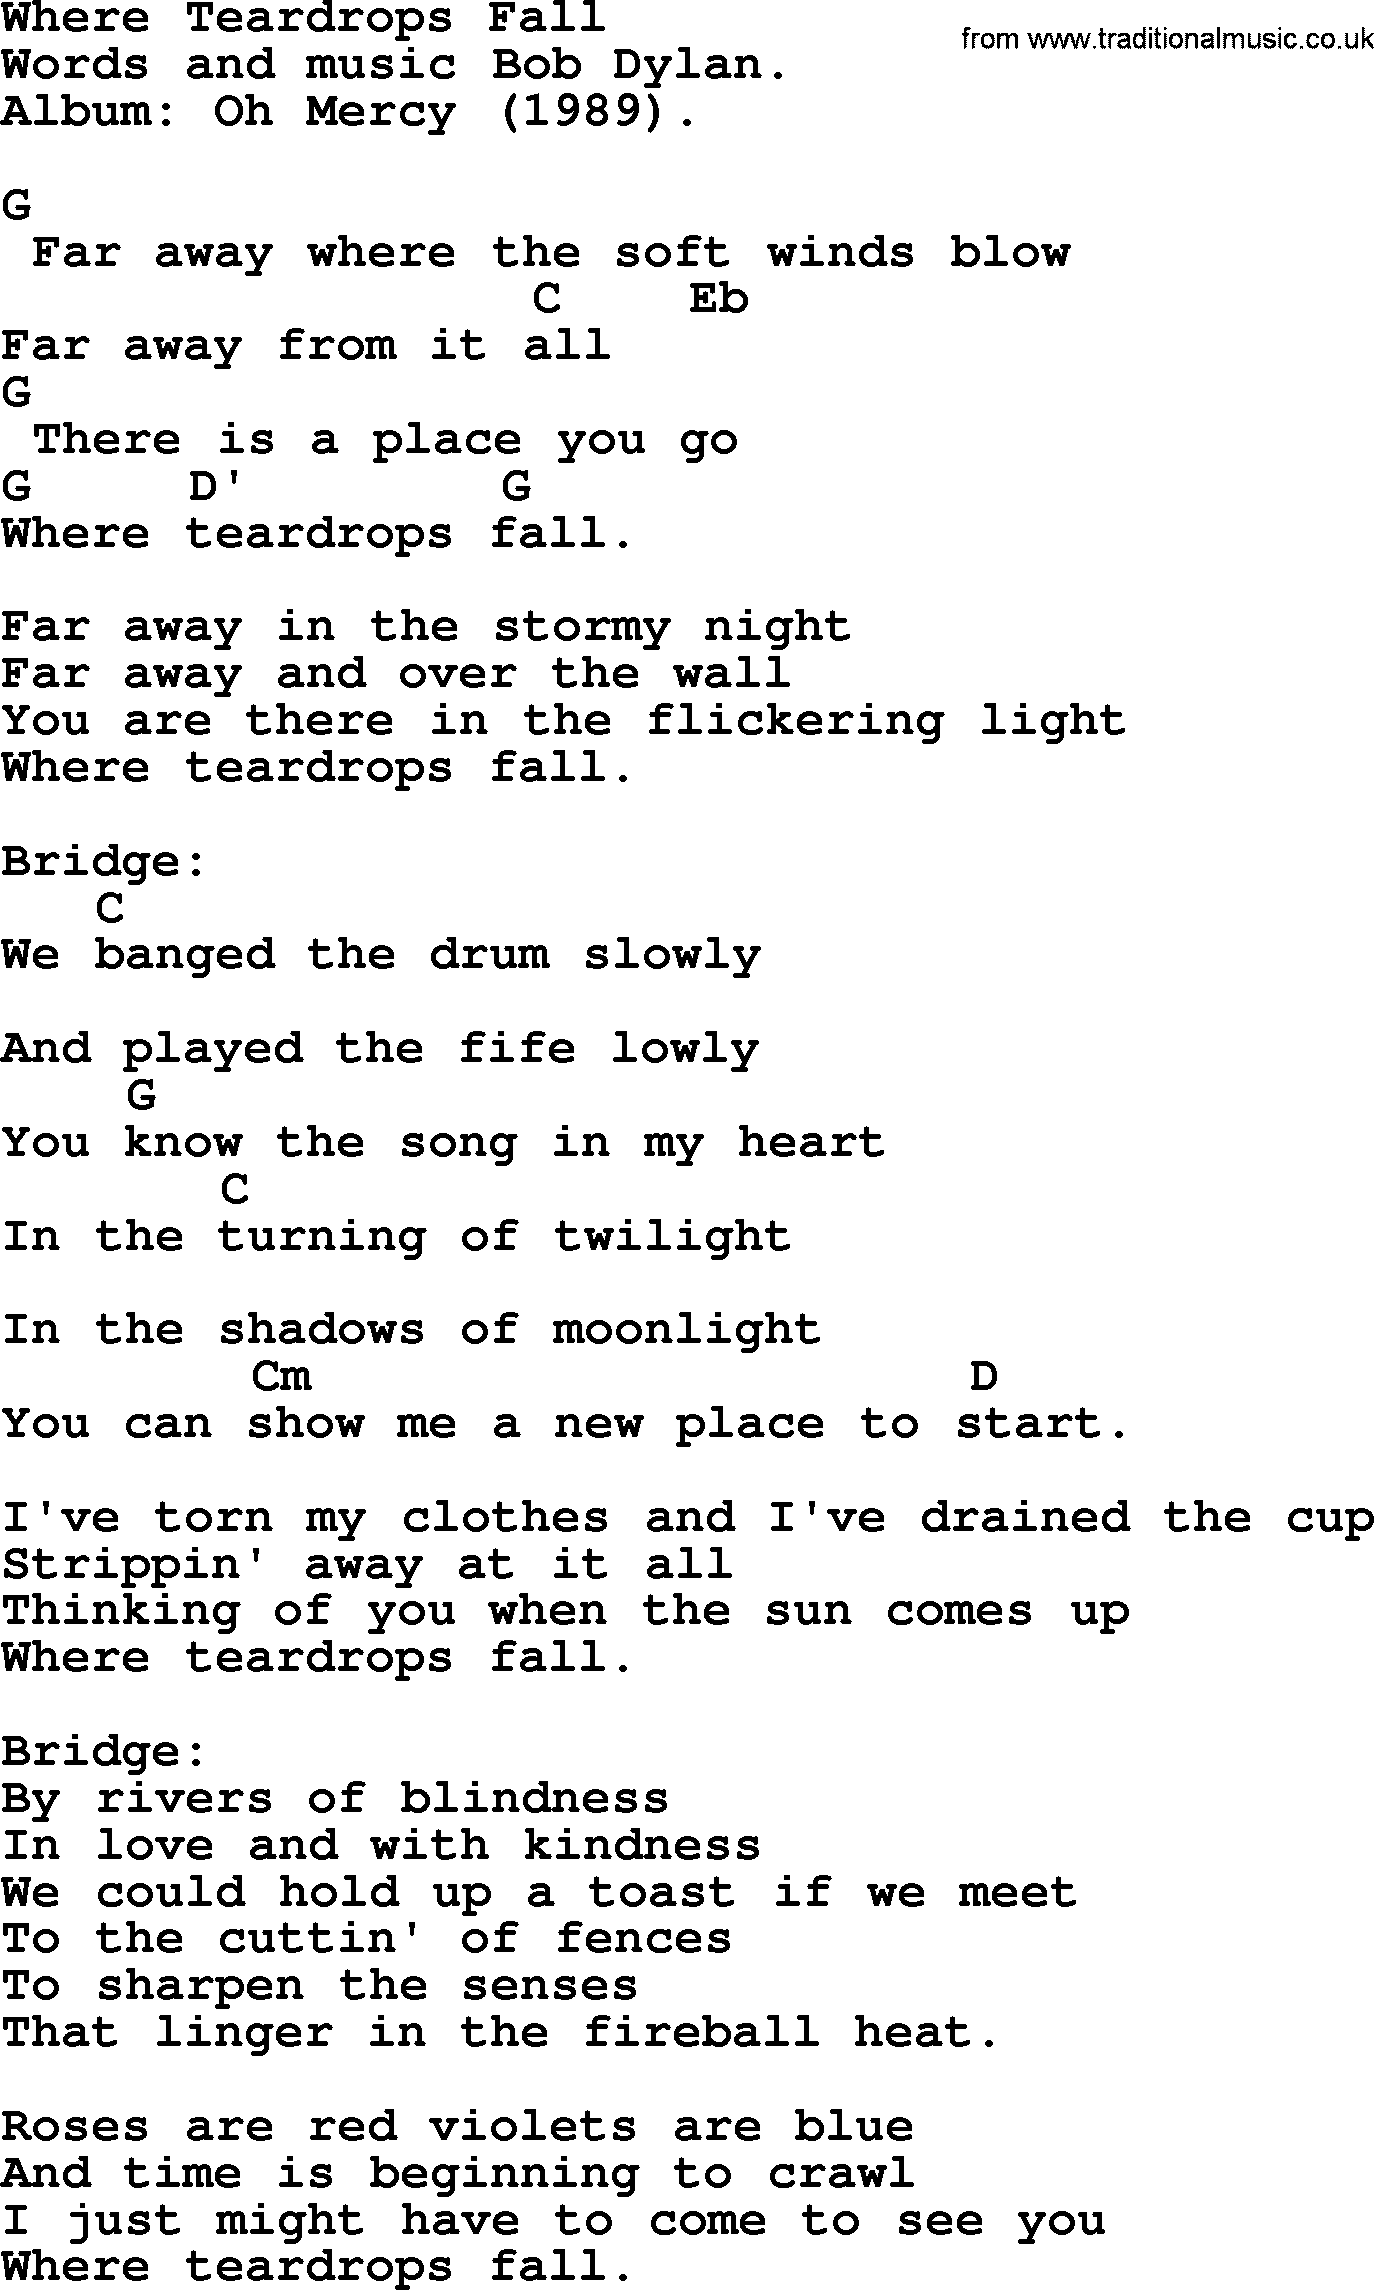 Bob Dylan song, lyrics with chords - Where Teardrops Fall